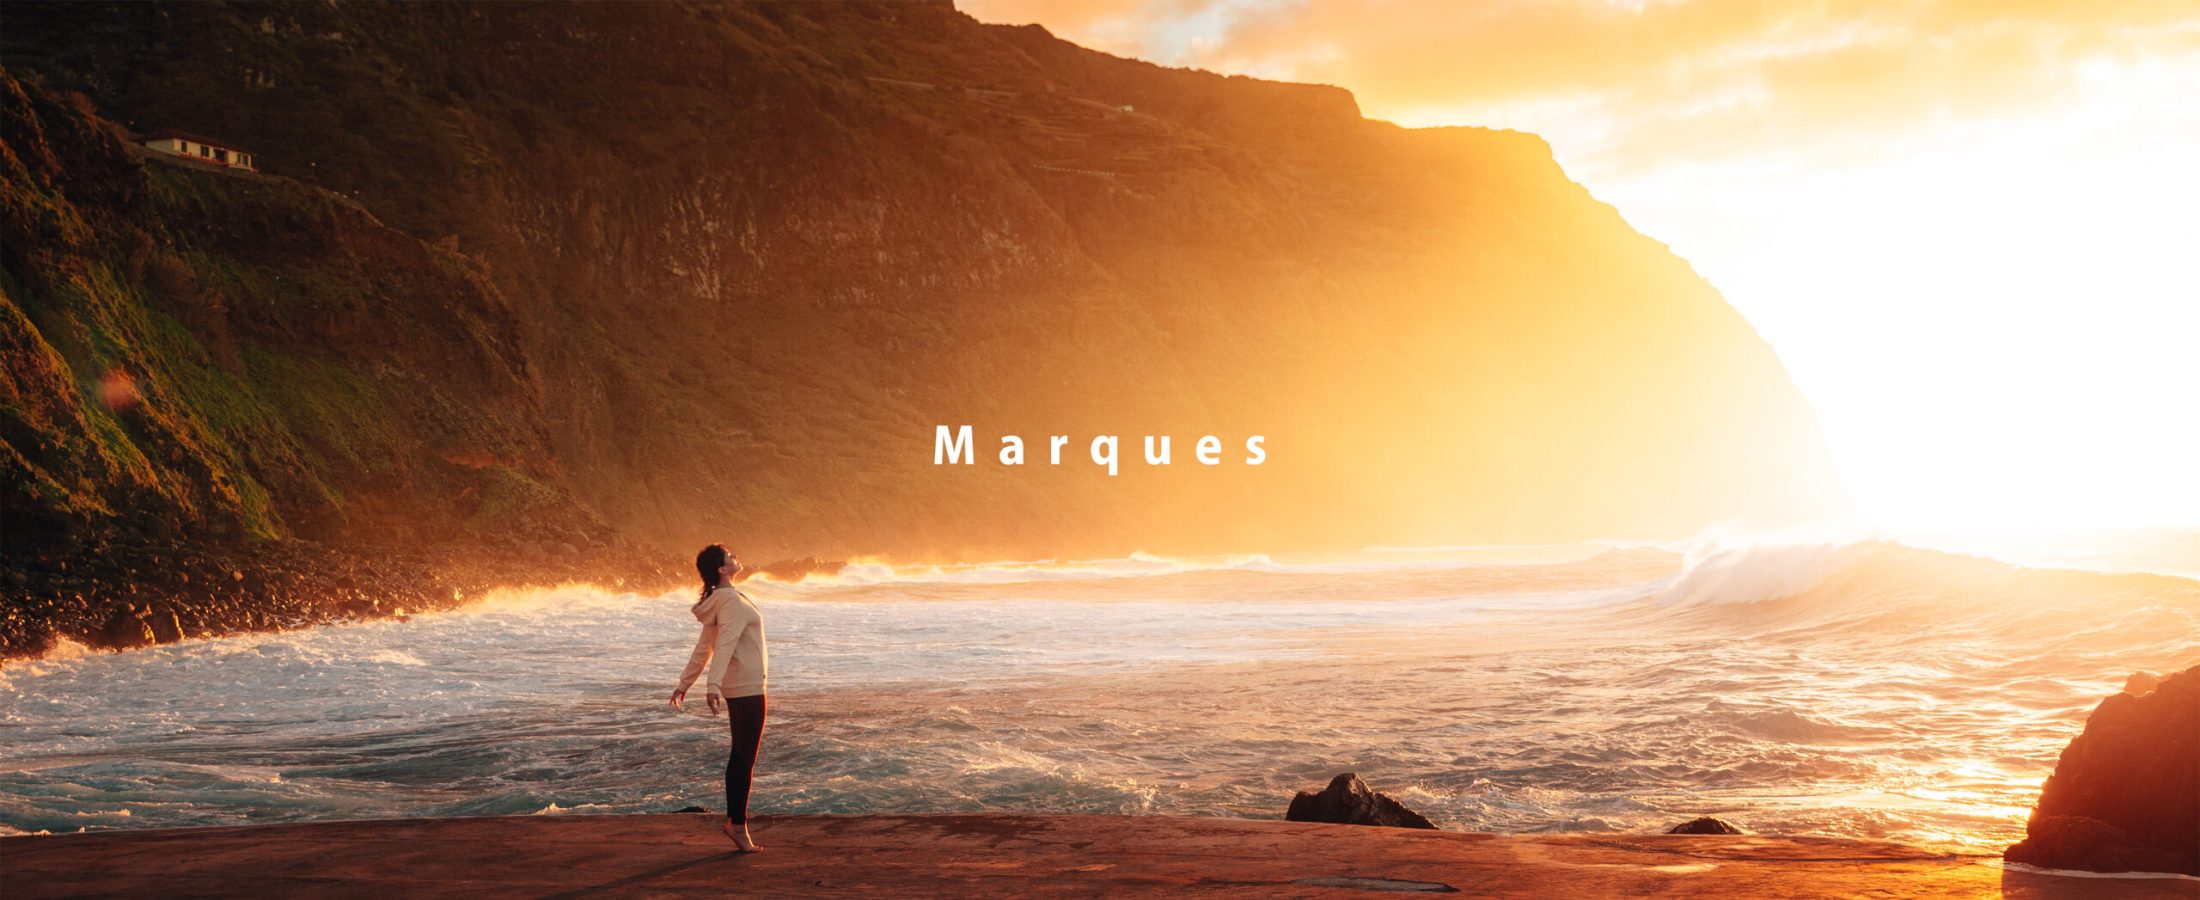 Marques - Charles Chevrot